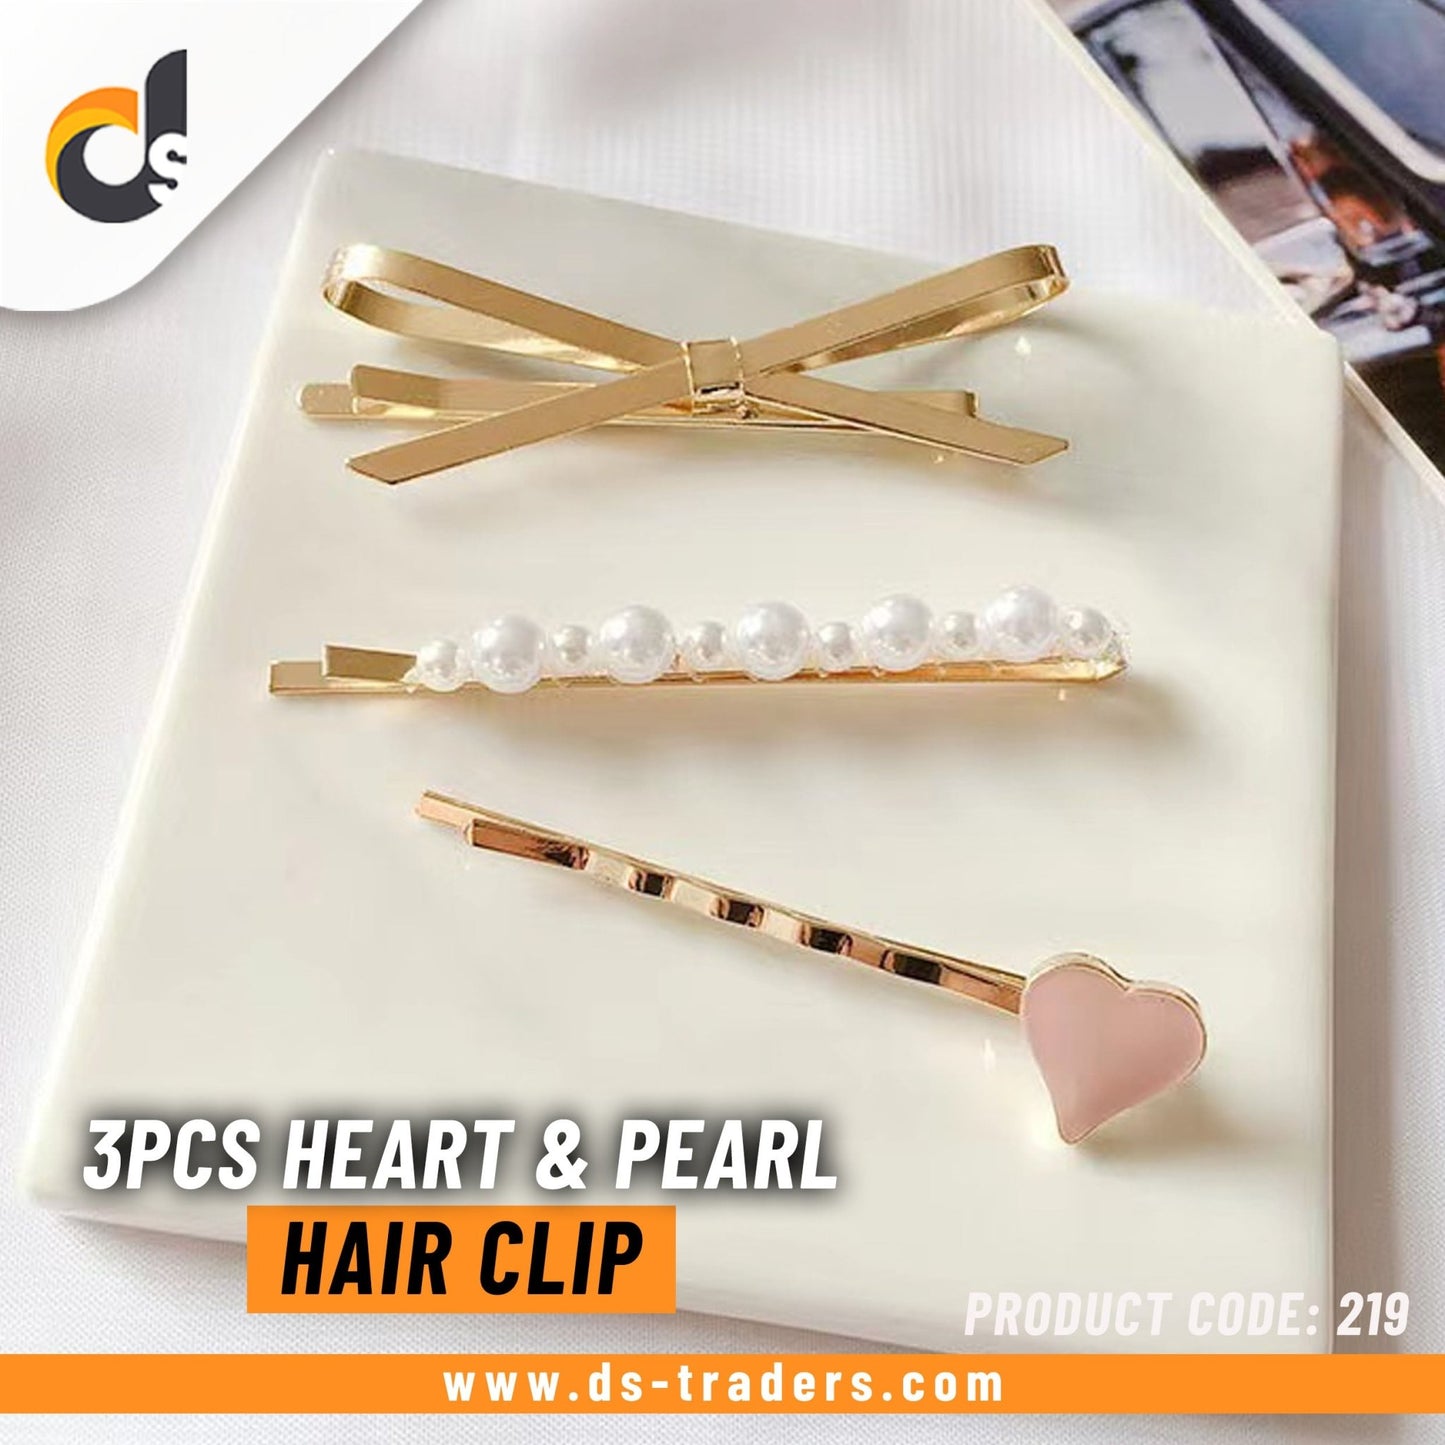 3Pcs Heart & Pearl Earrings - DS Traders